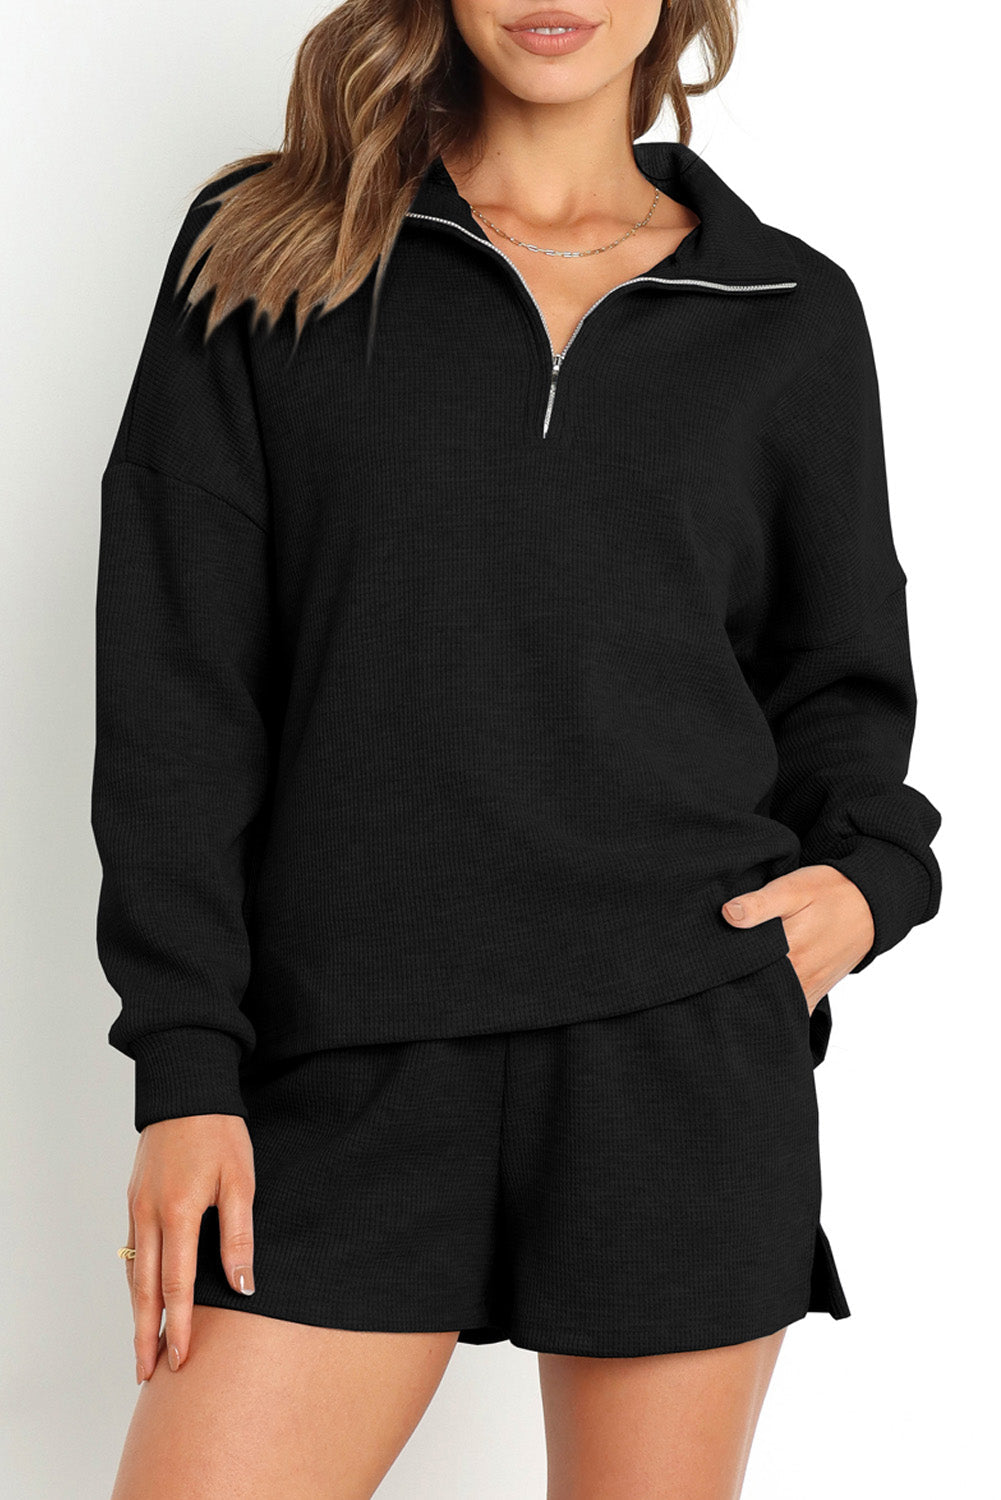 Black ribbed zipper sweatshirt and high waist shorts set - s / 60% cotton + 35% polyester + 5% elastane - loungewear